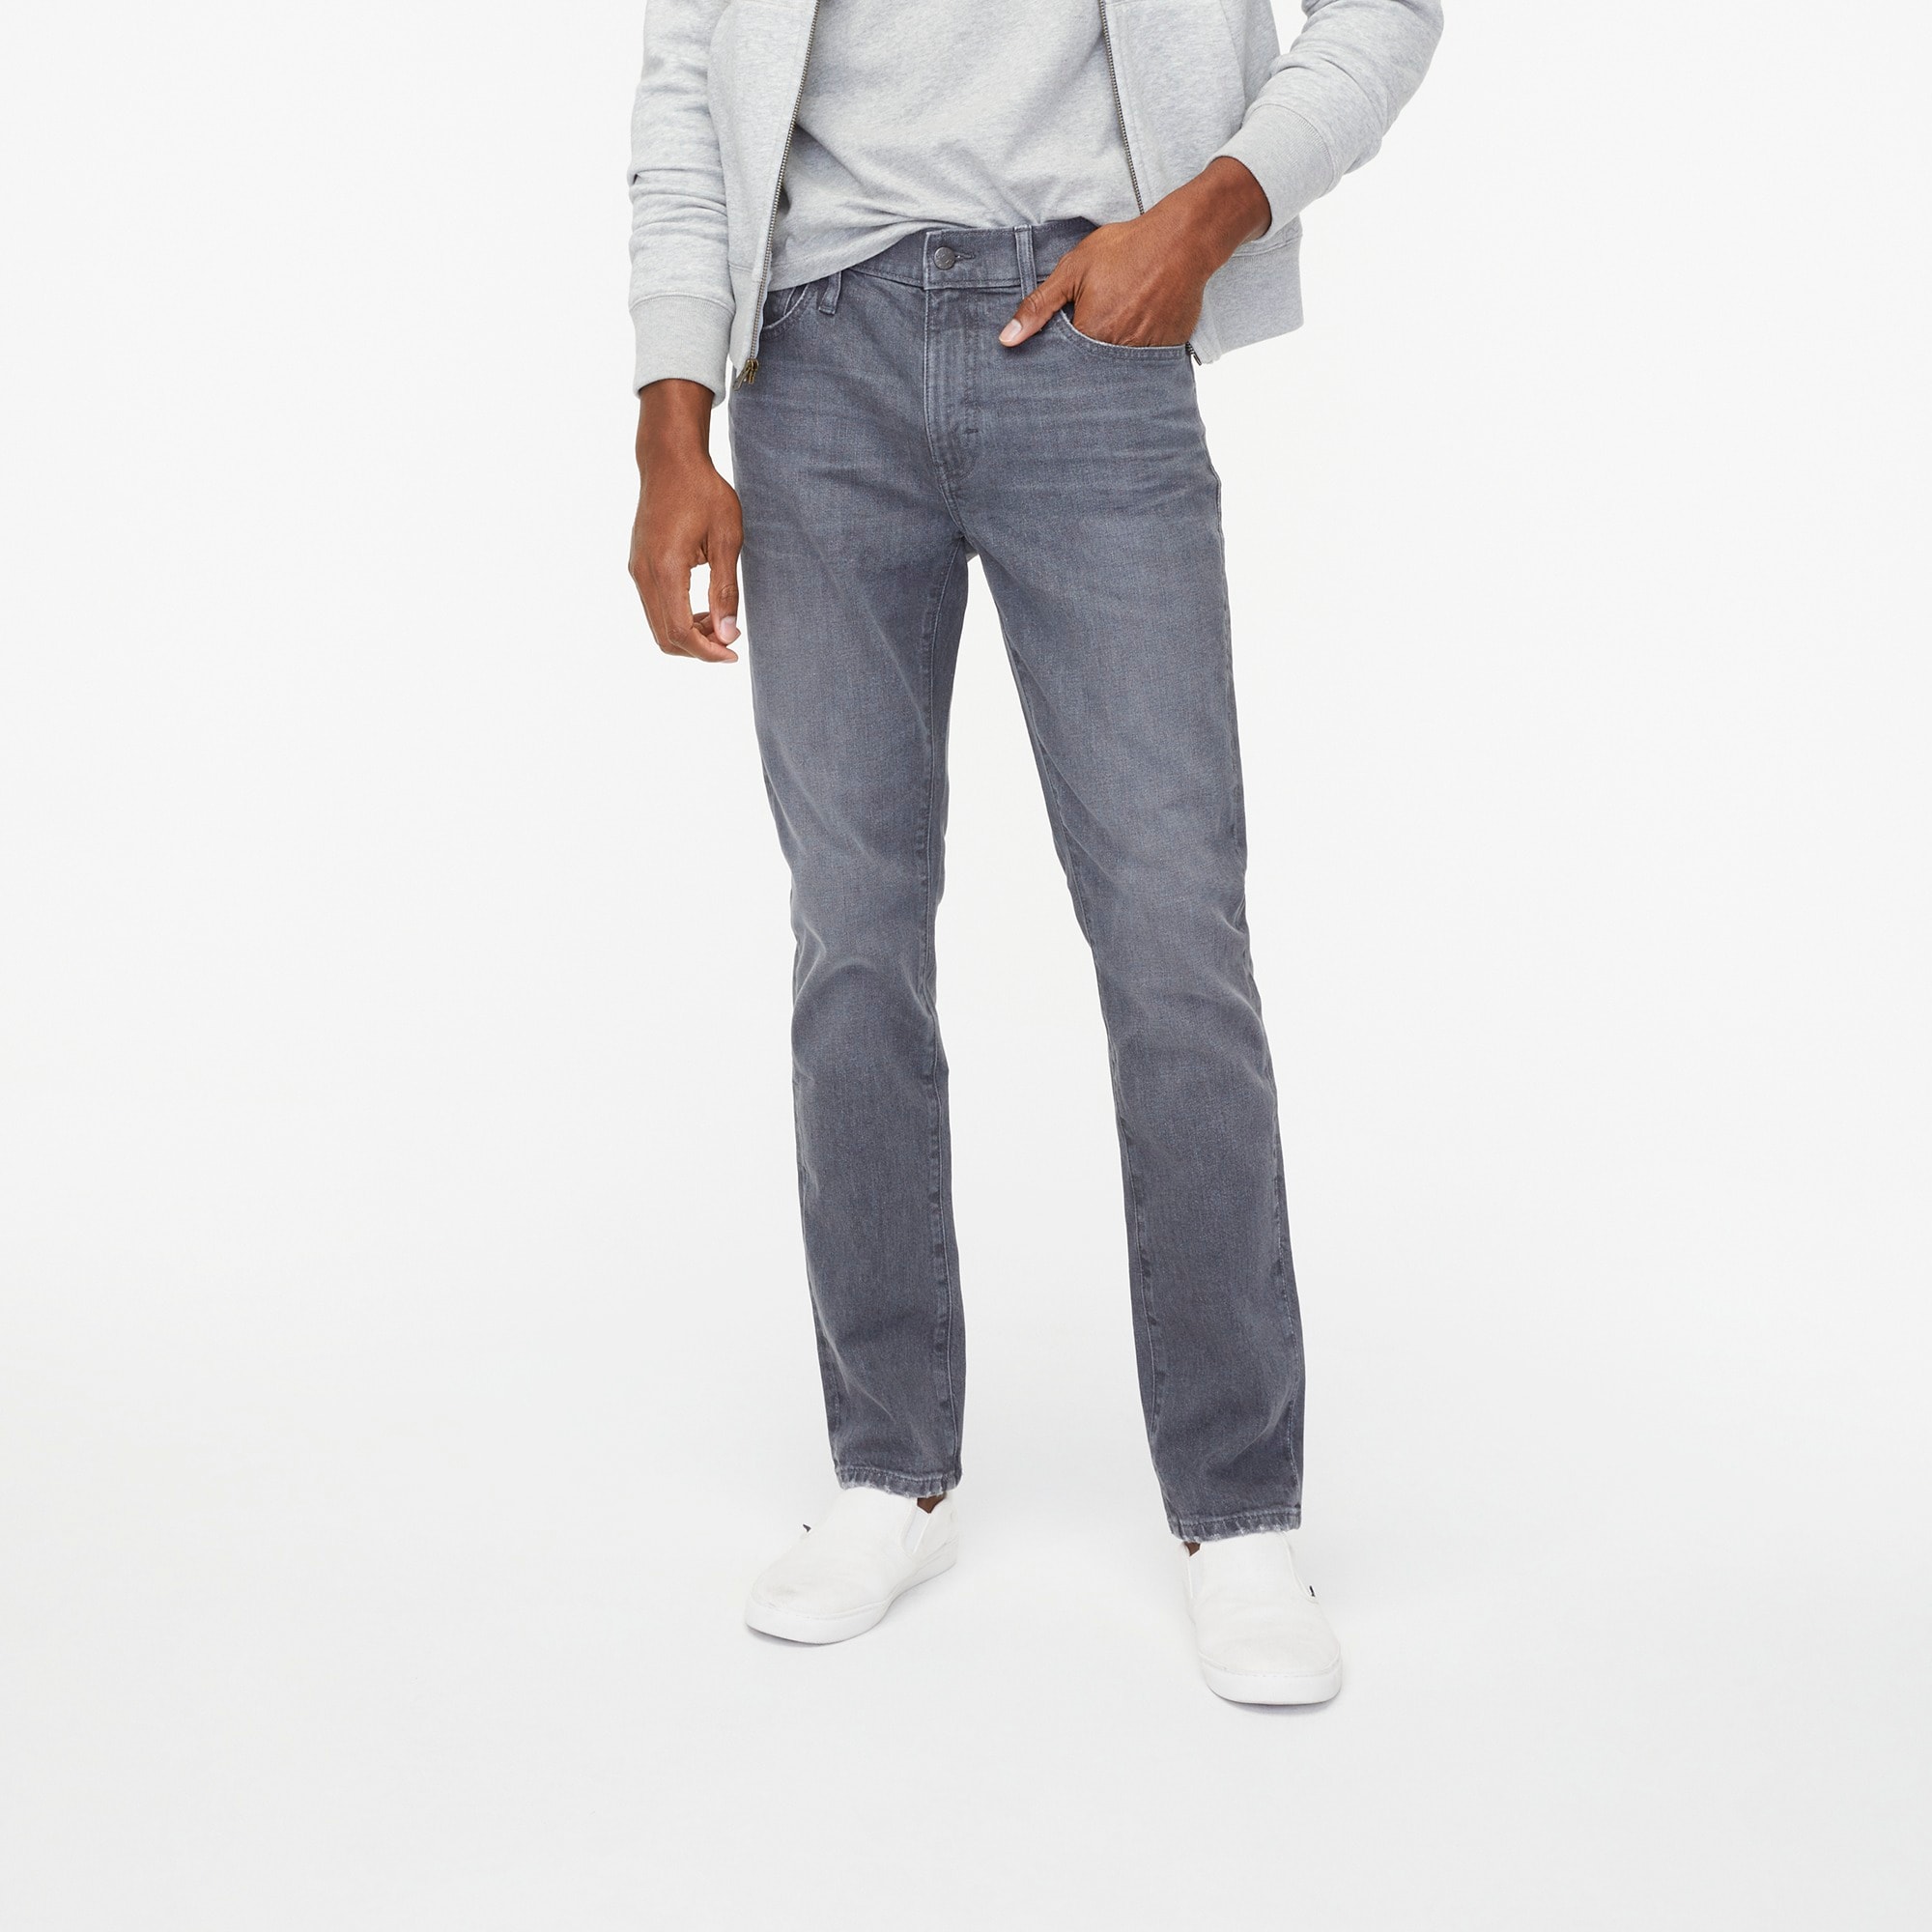 mens Slim-fit grey jean in signature flex